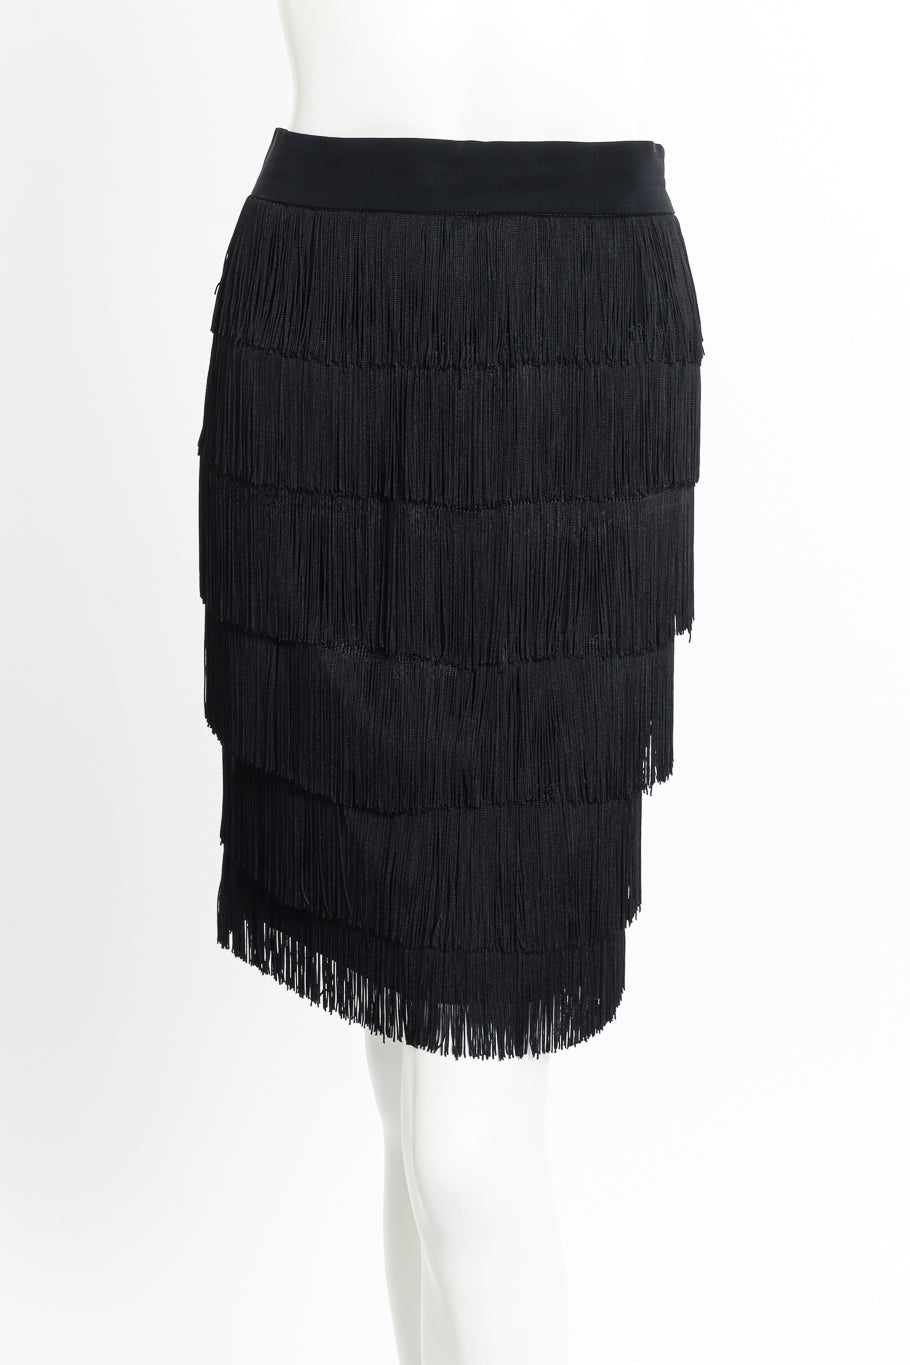 Vintage Moschino Couture Fringe Jacket and Skirt Set skirt front on mannequin @recessla